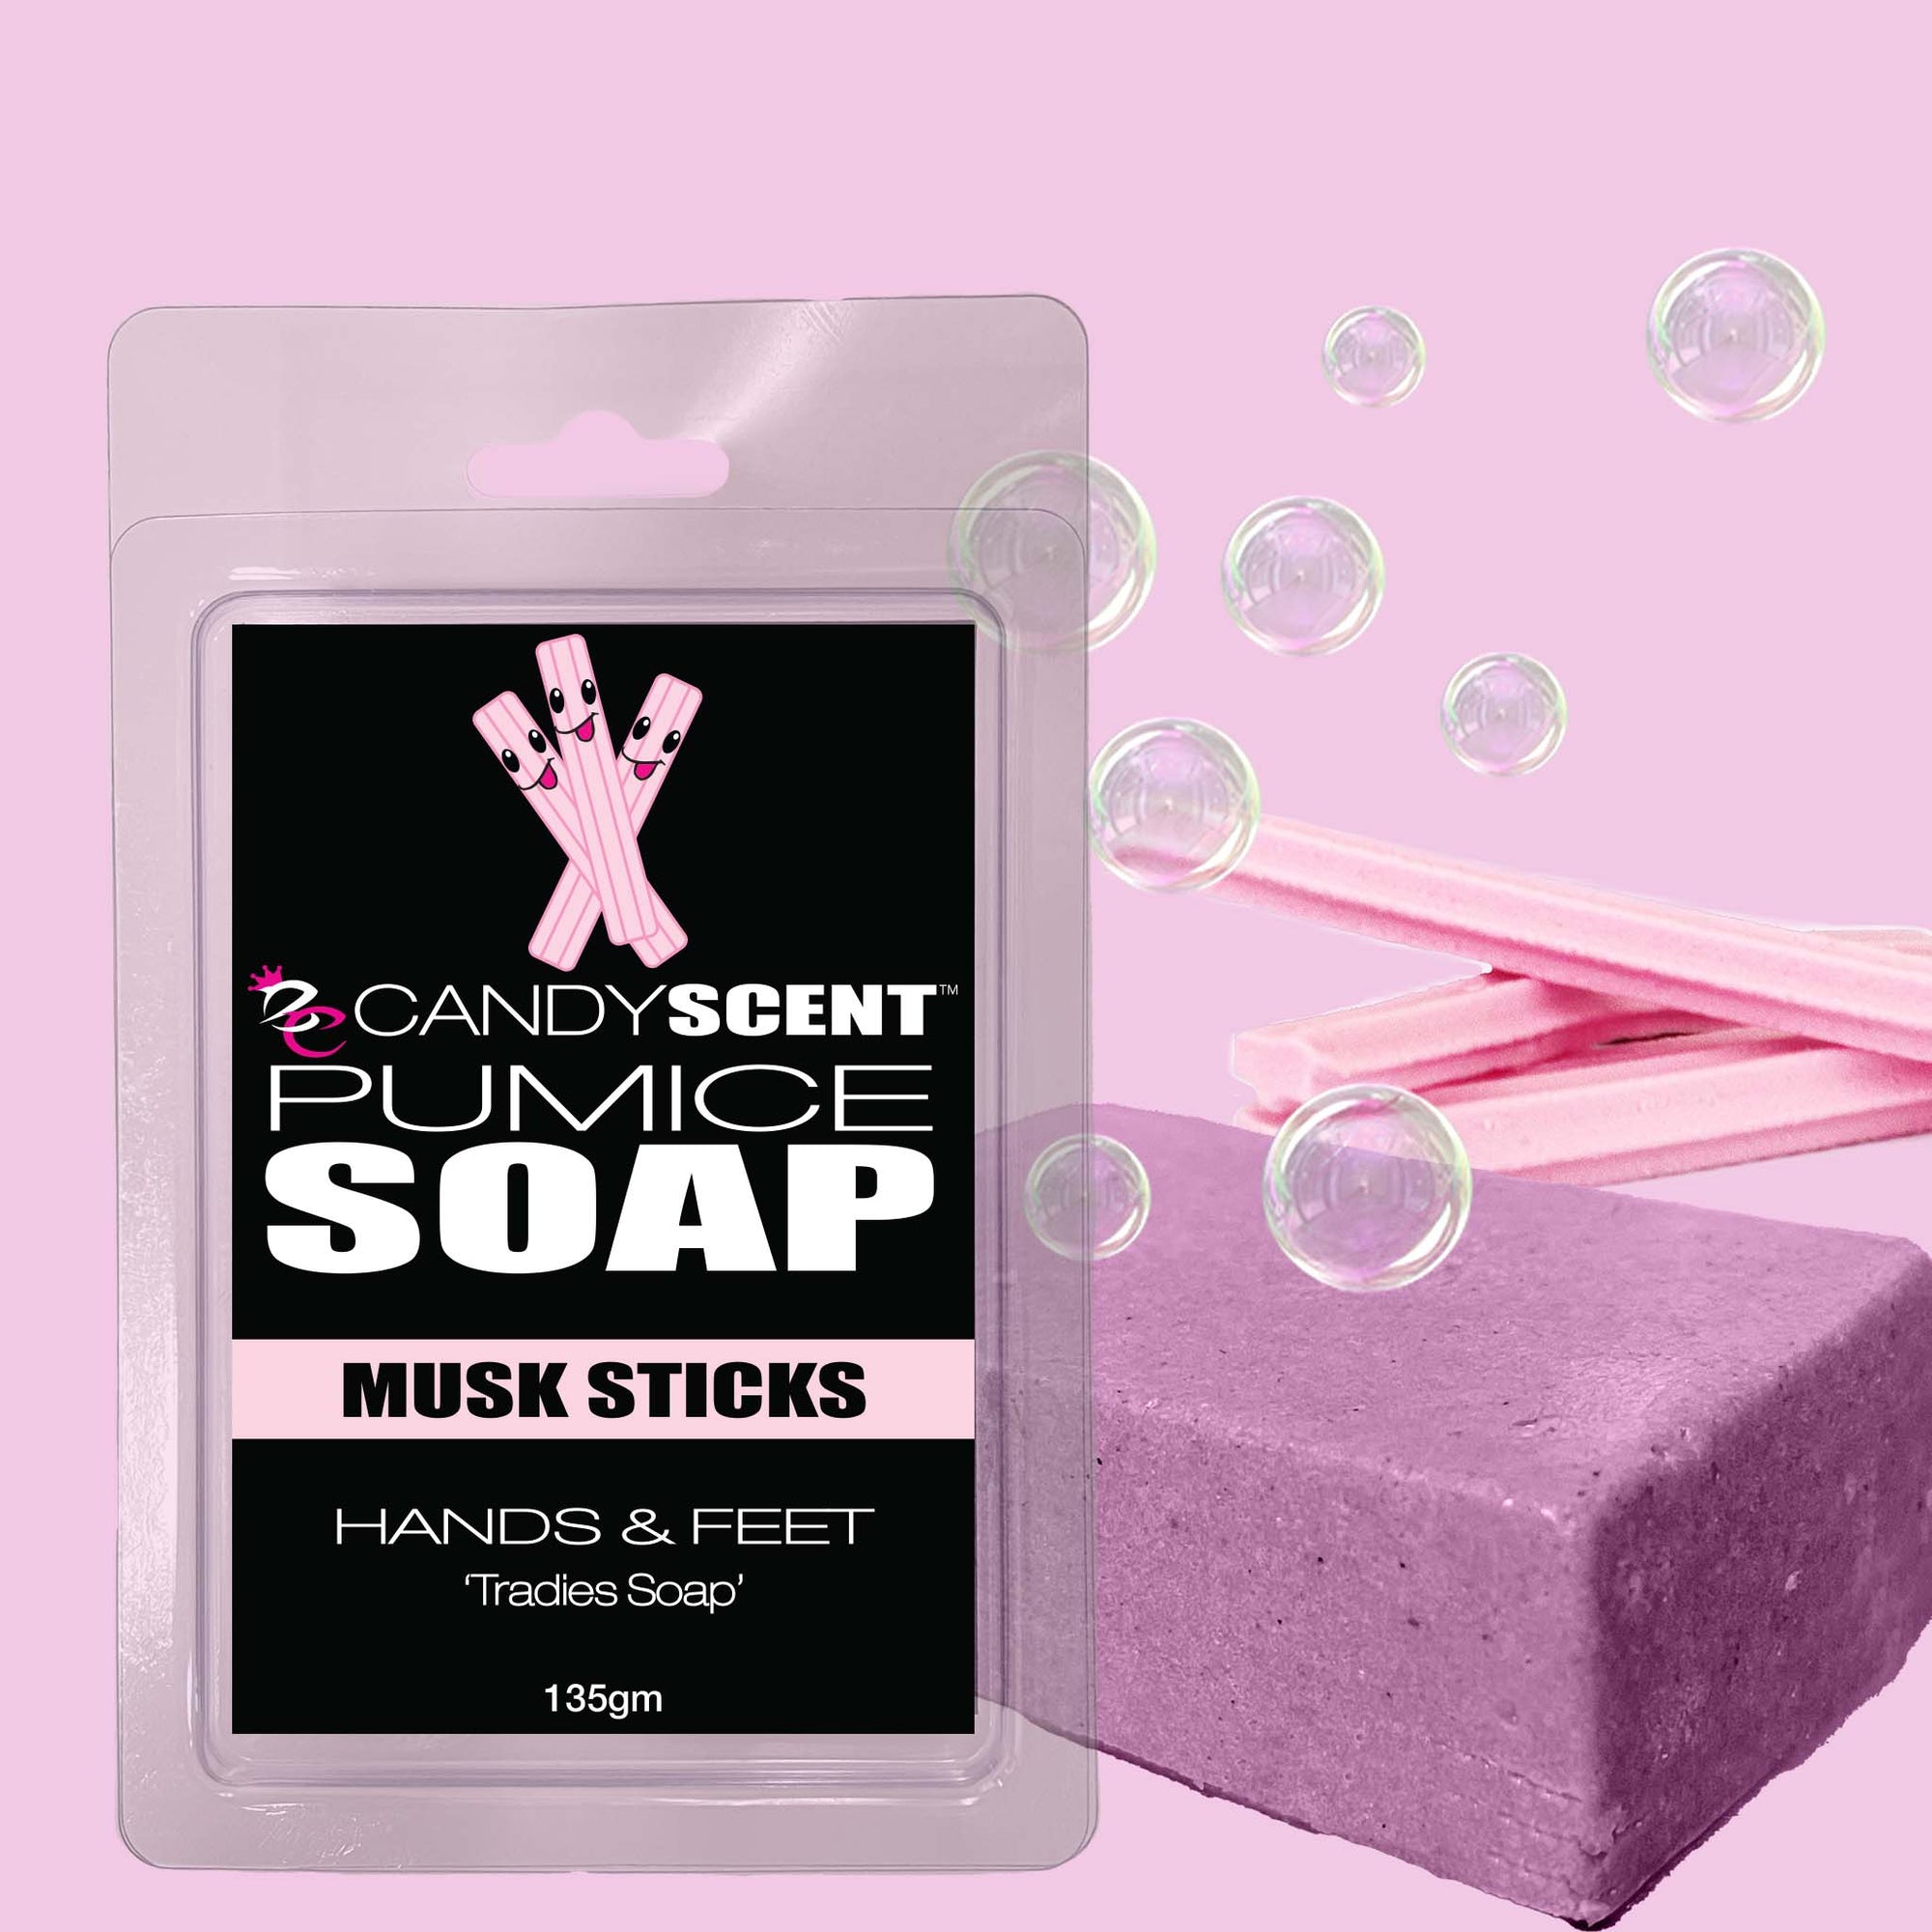 MUSK STICKS Pumice Soap